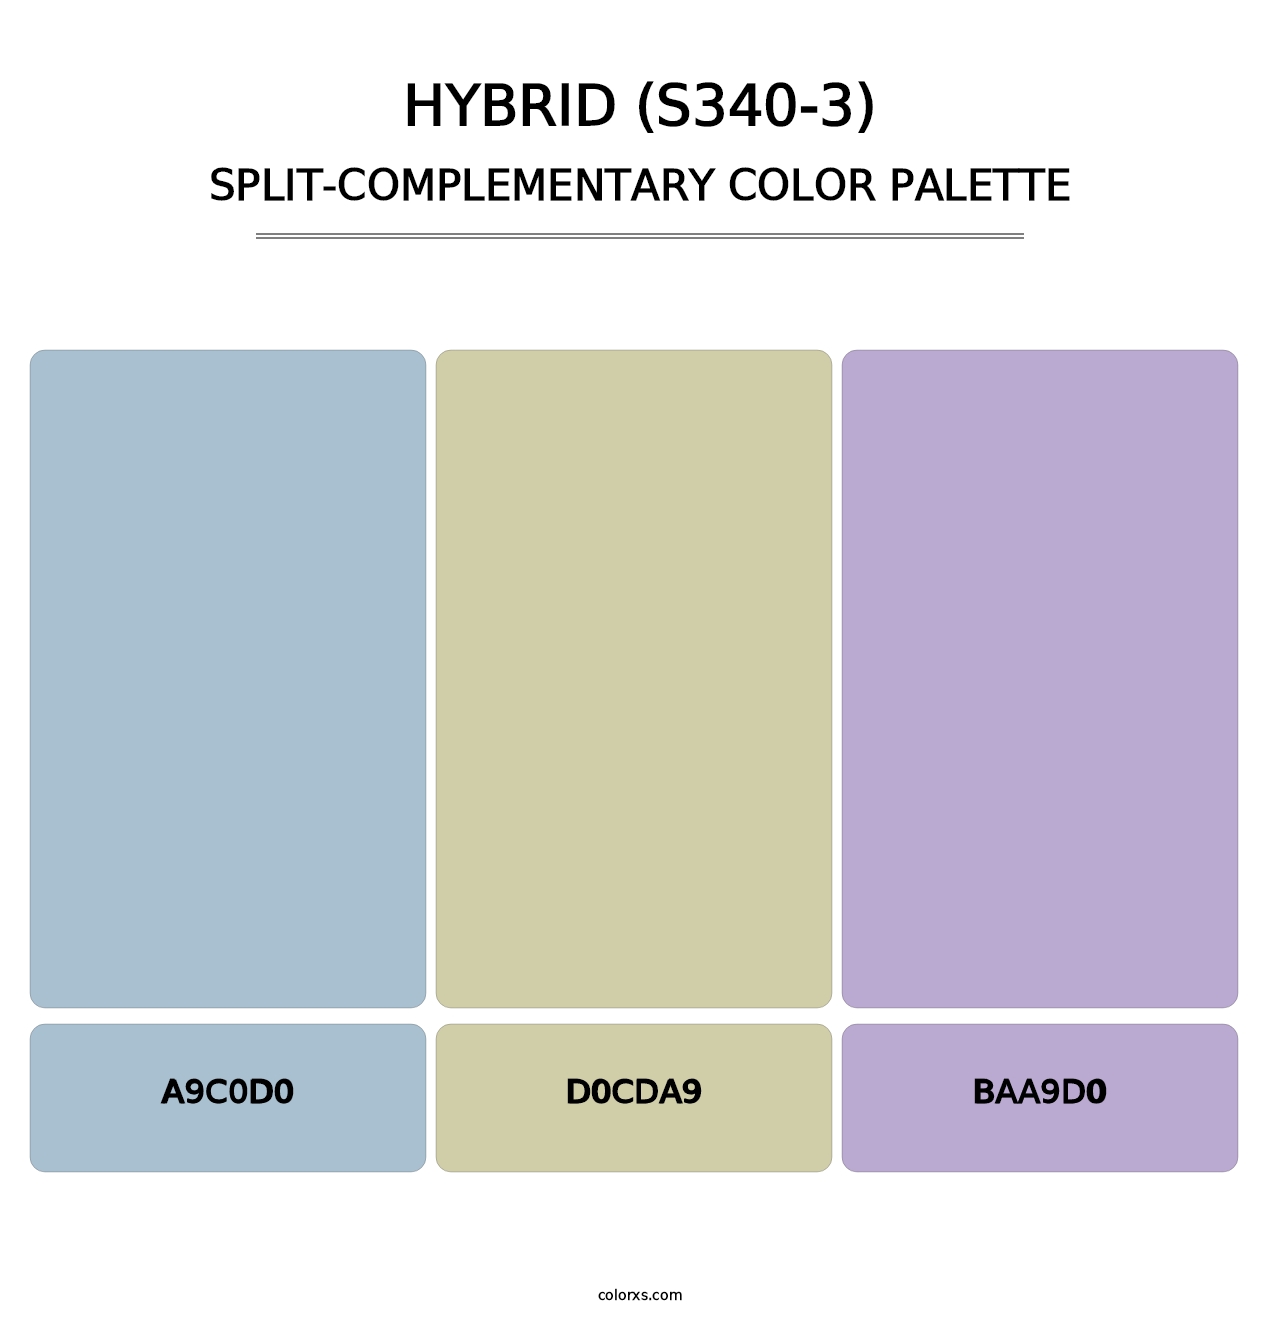 Hybrid (S340-3) - Split-Complementary Color Palette